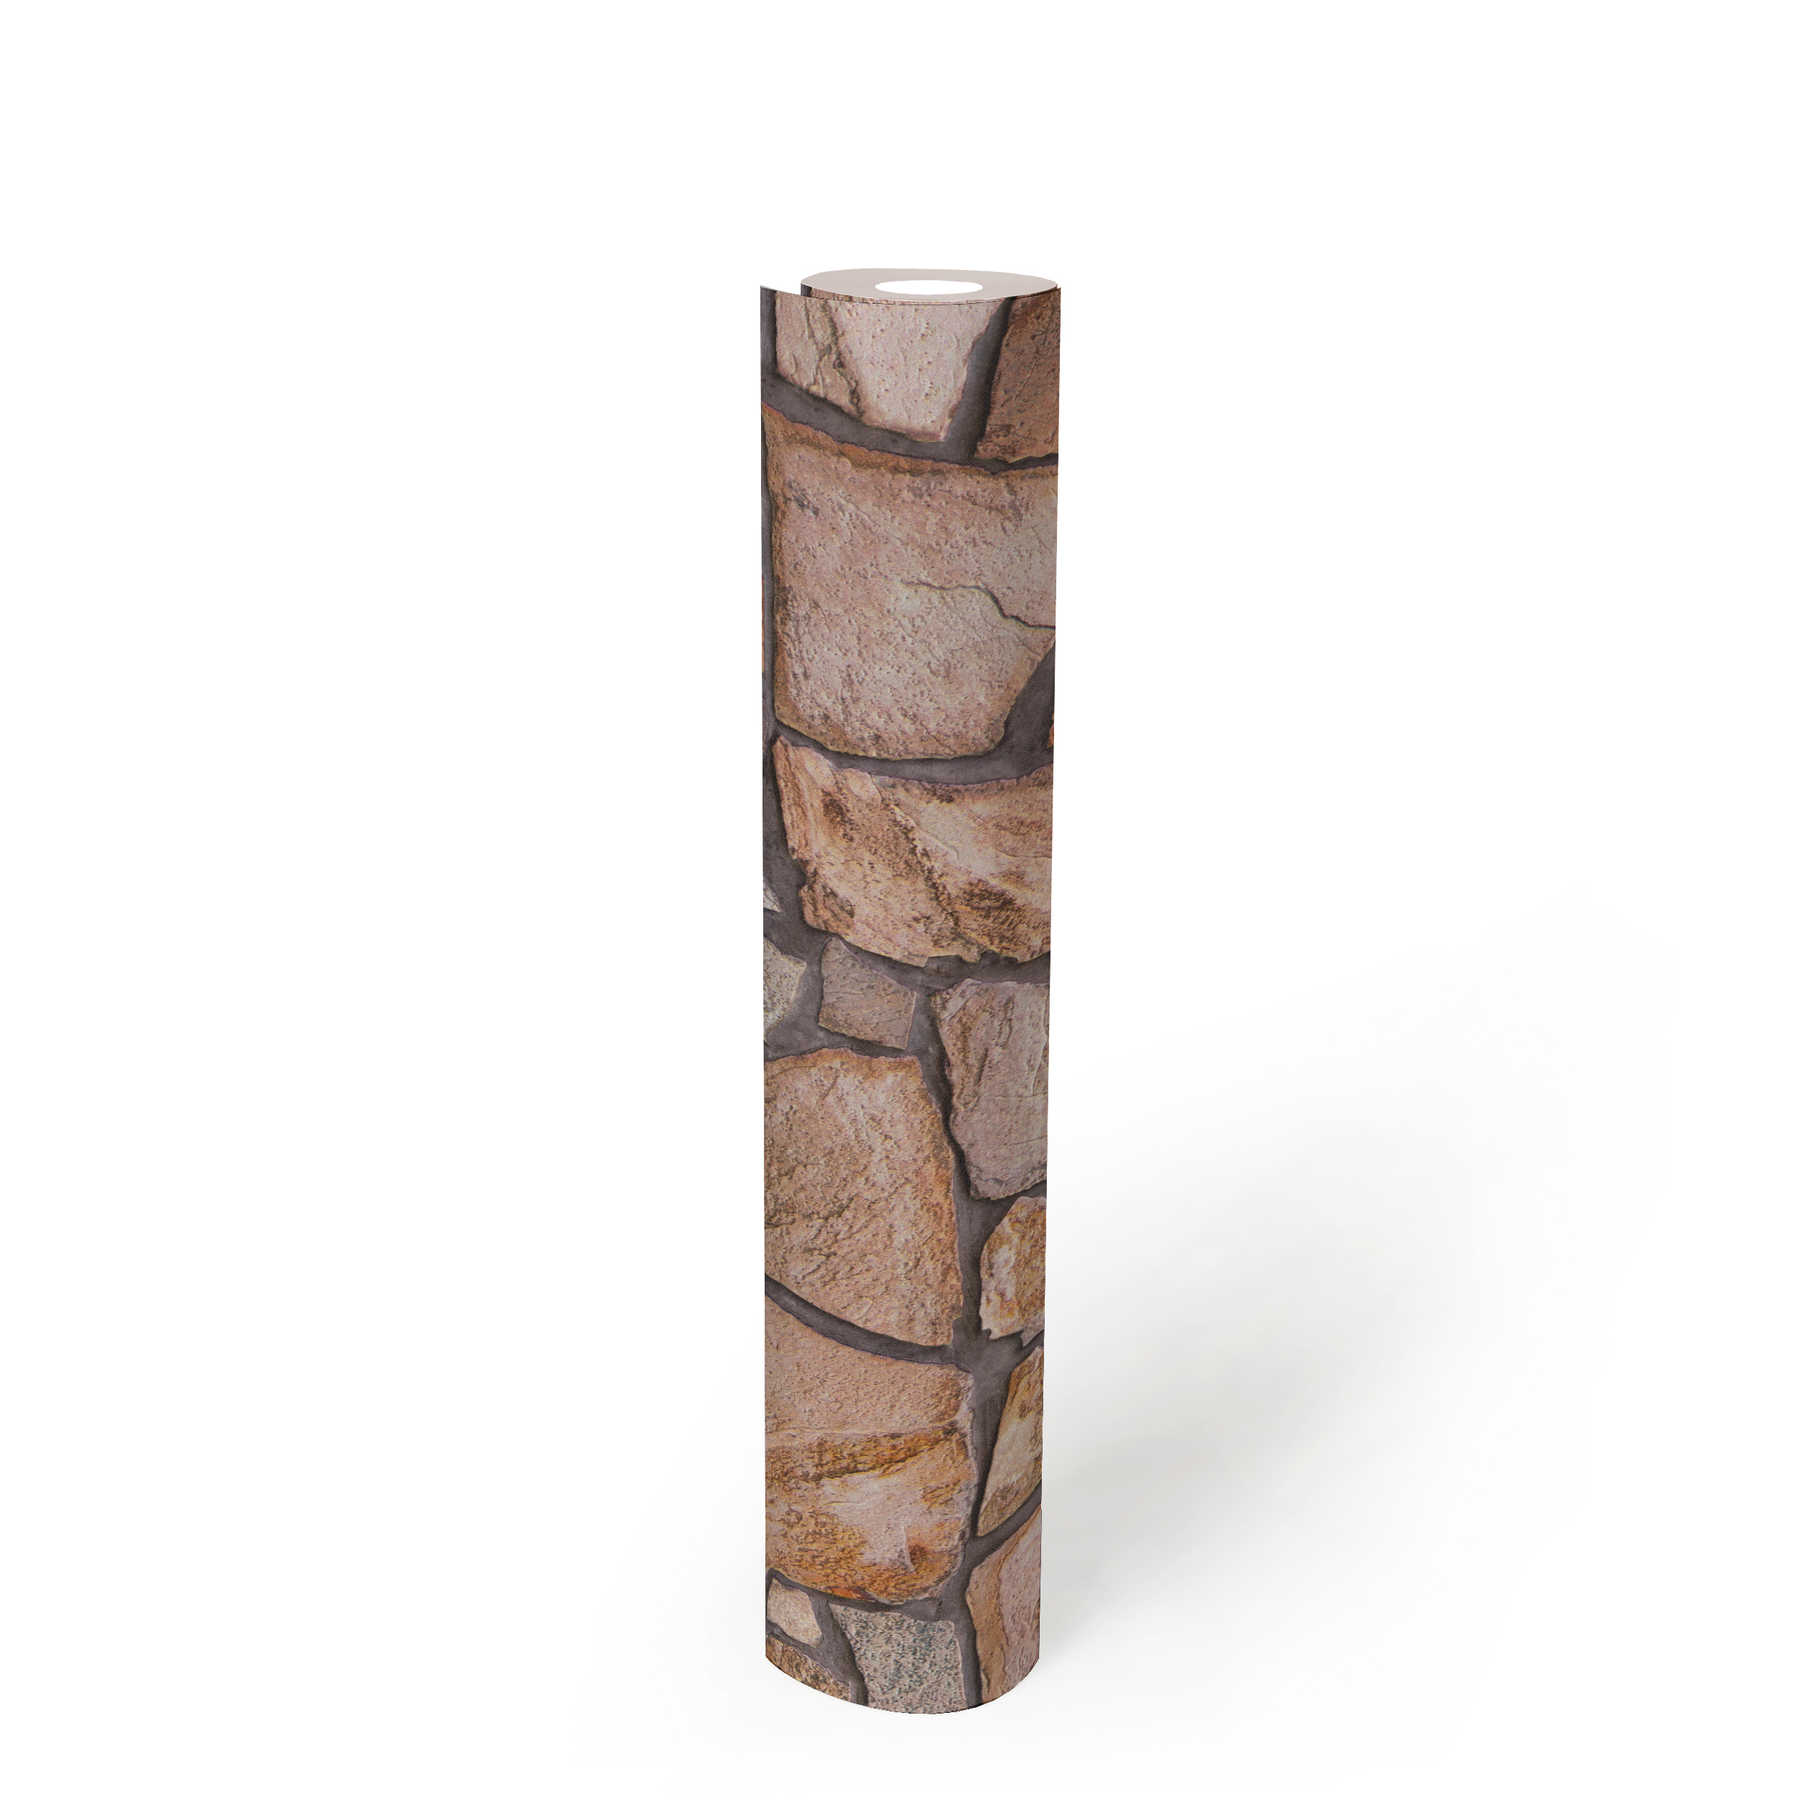             3D wallpaper natural stone detailed & rustic - brown, beige, grey
        